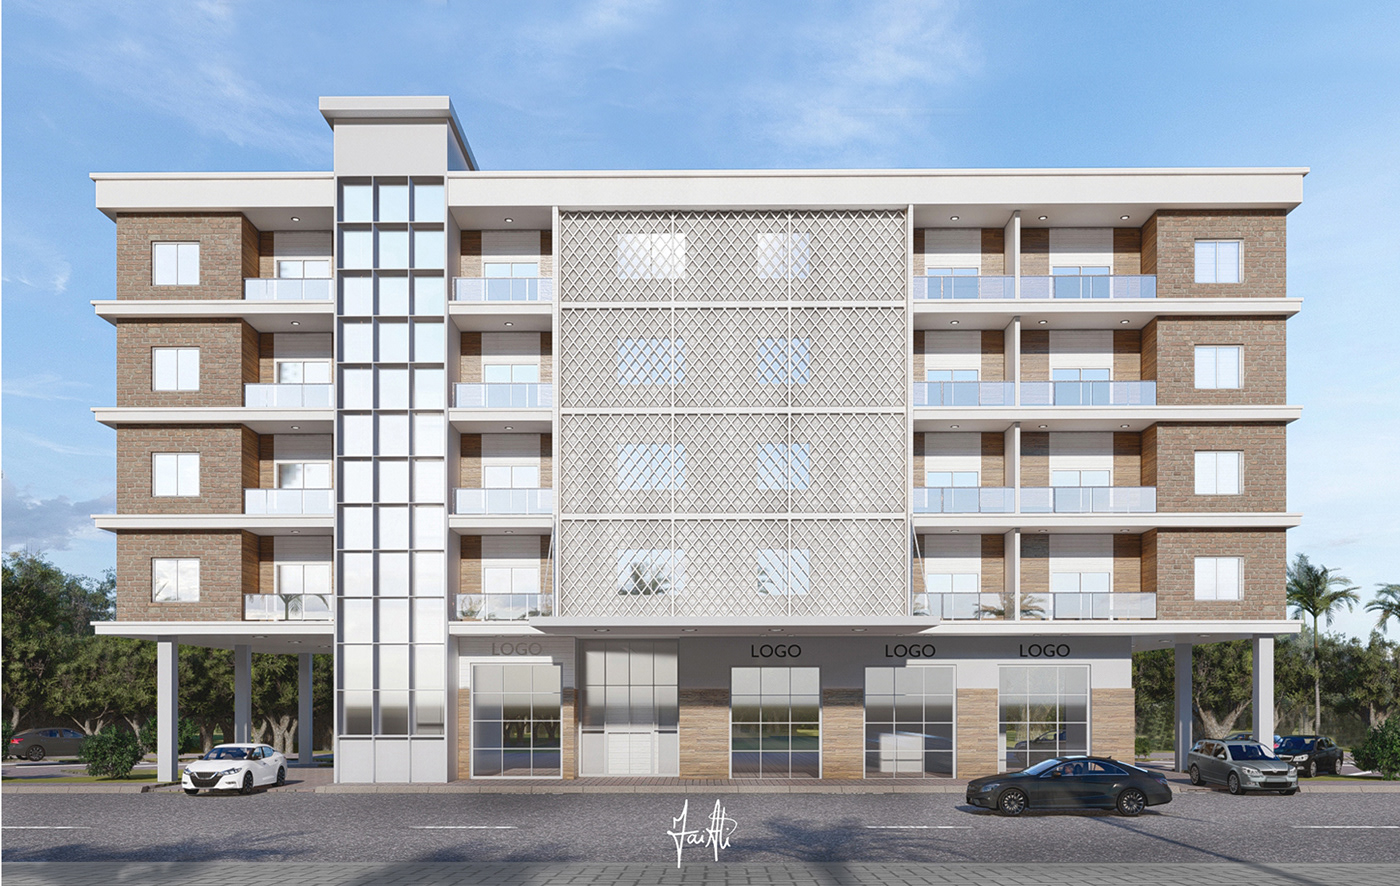 apartments architectural design exterior plans Render visualization